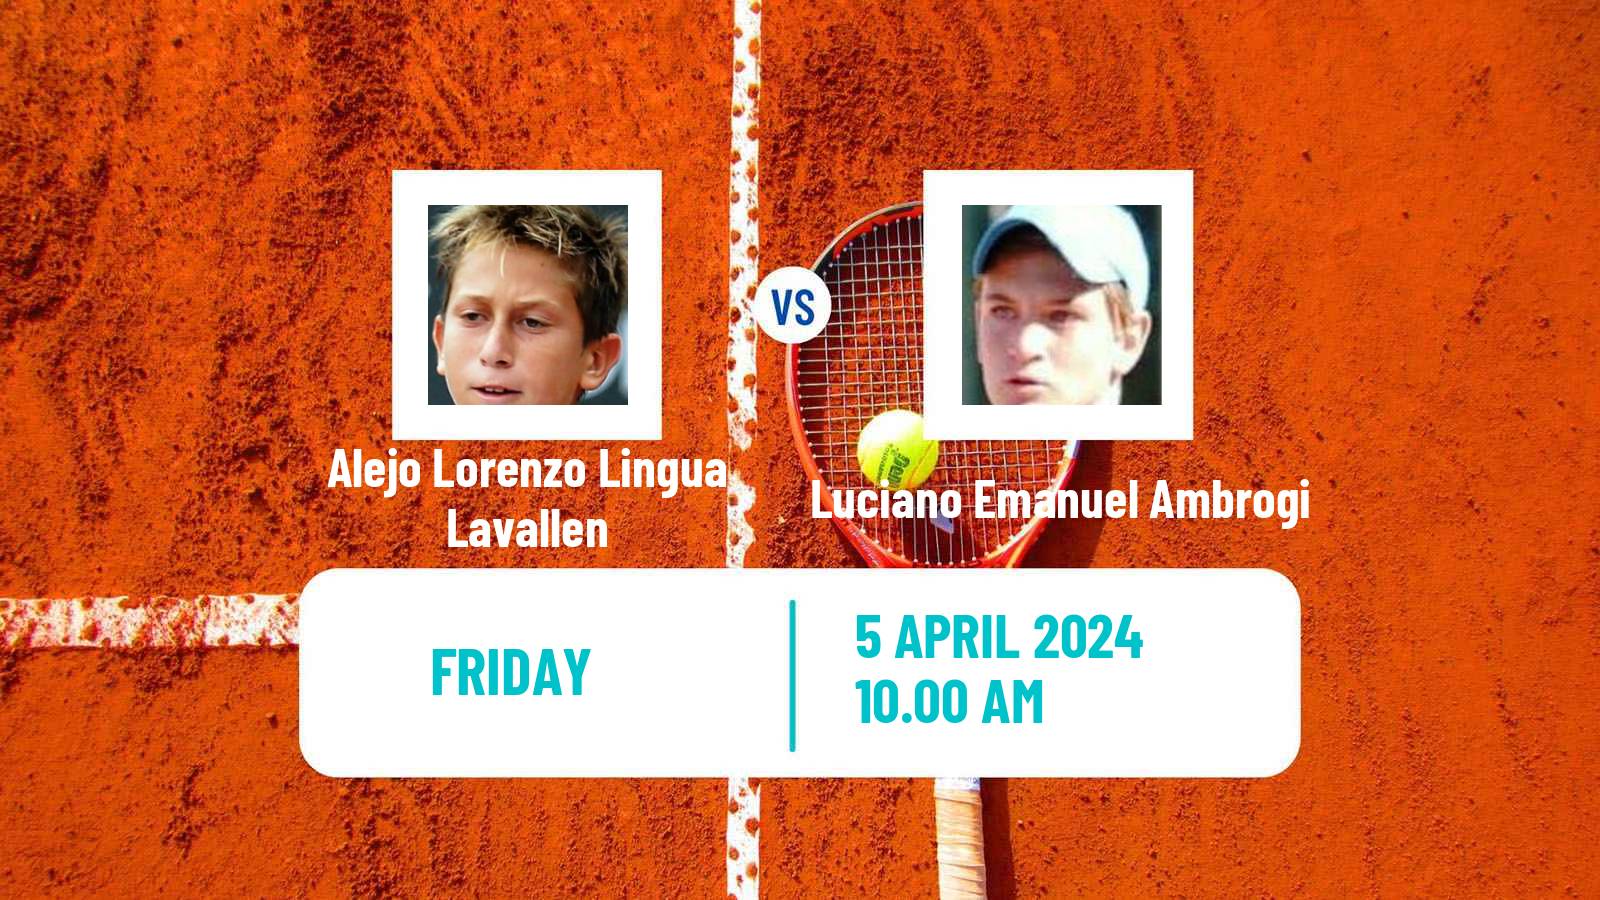 Tennis ITF M15 Bragado 2 Men Alejo Lorenzo Lingua Lavallen - Luciano Emanuel Ambrogi